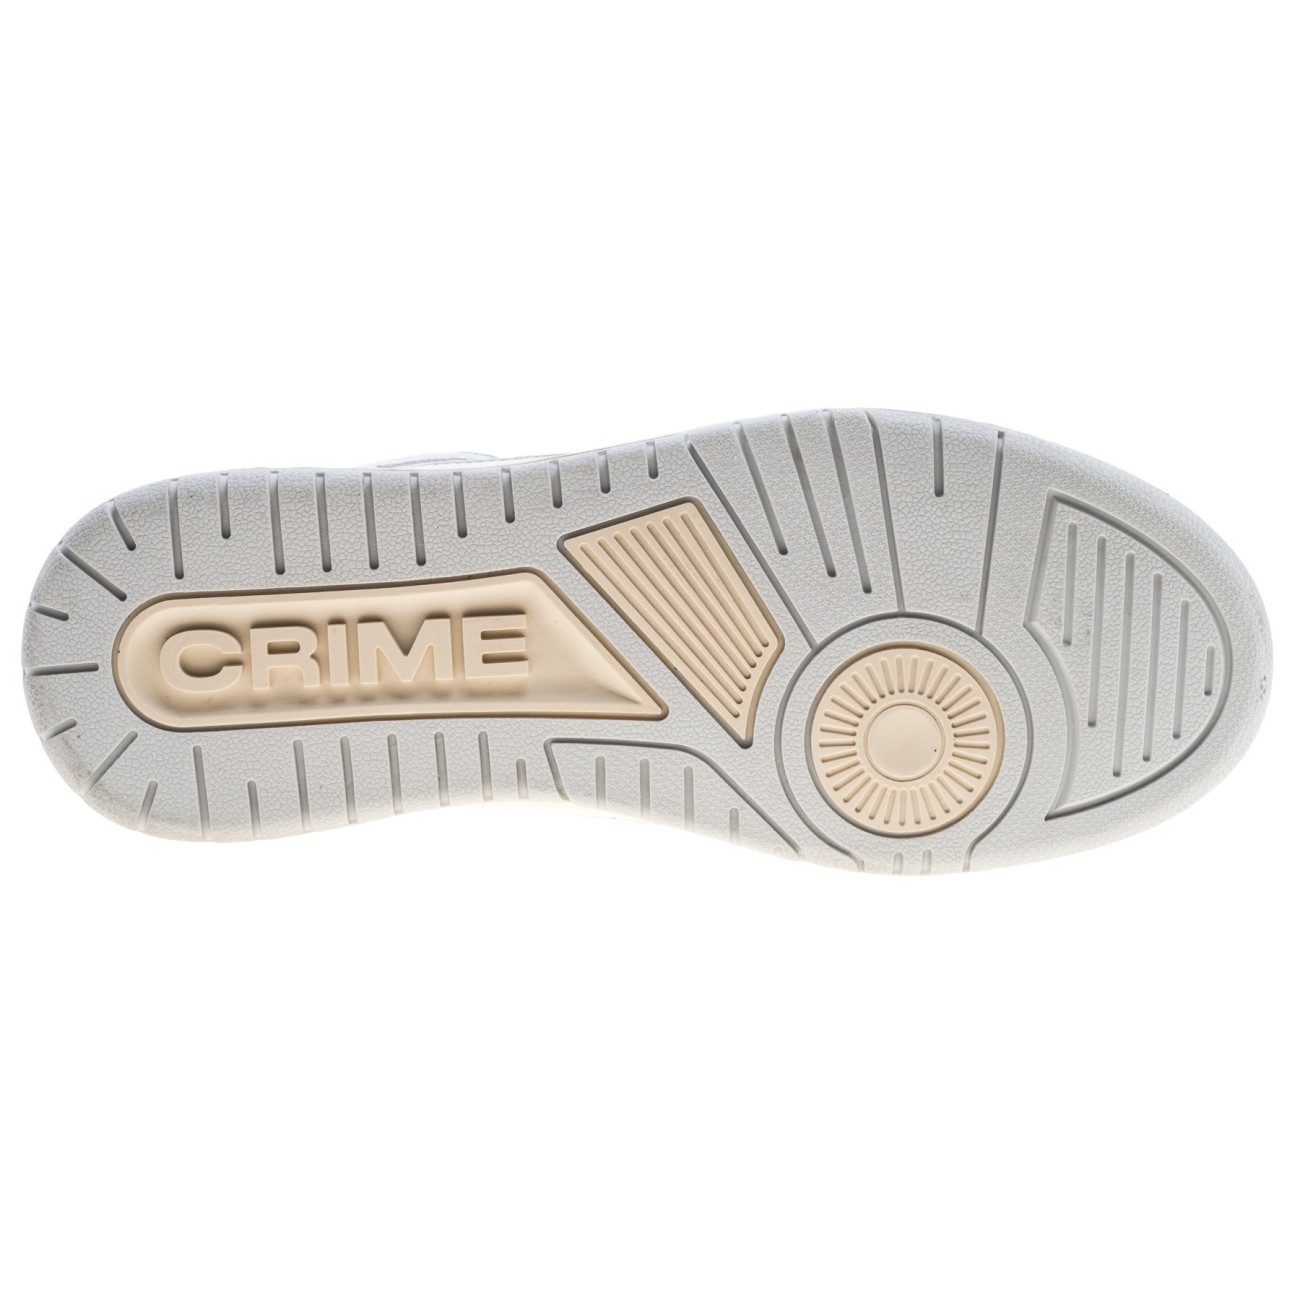 Crime London sneakers uomo...